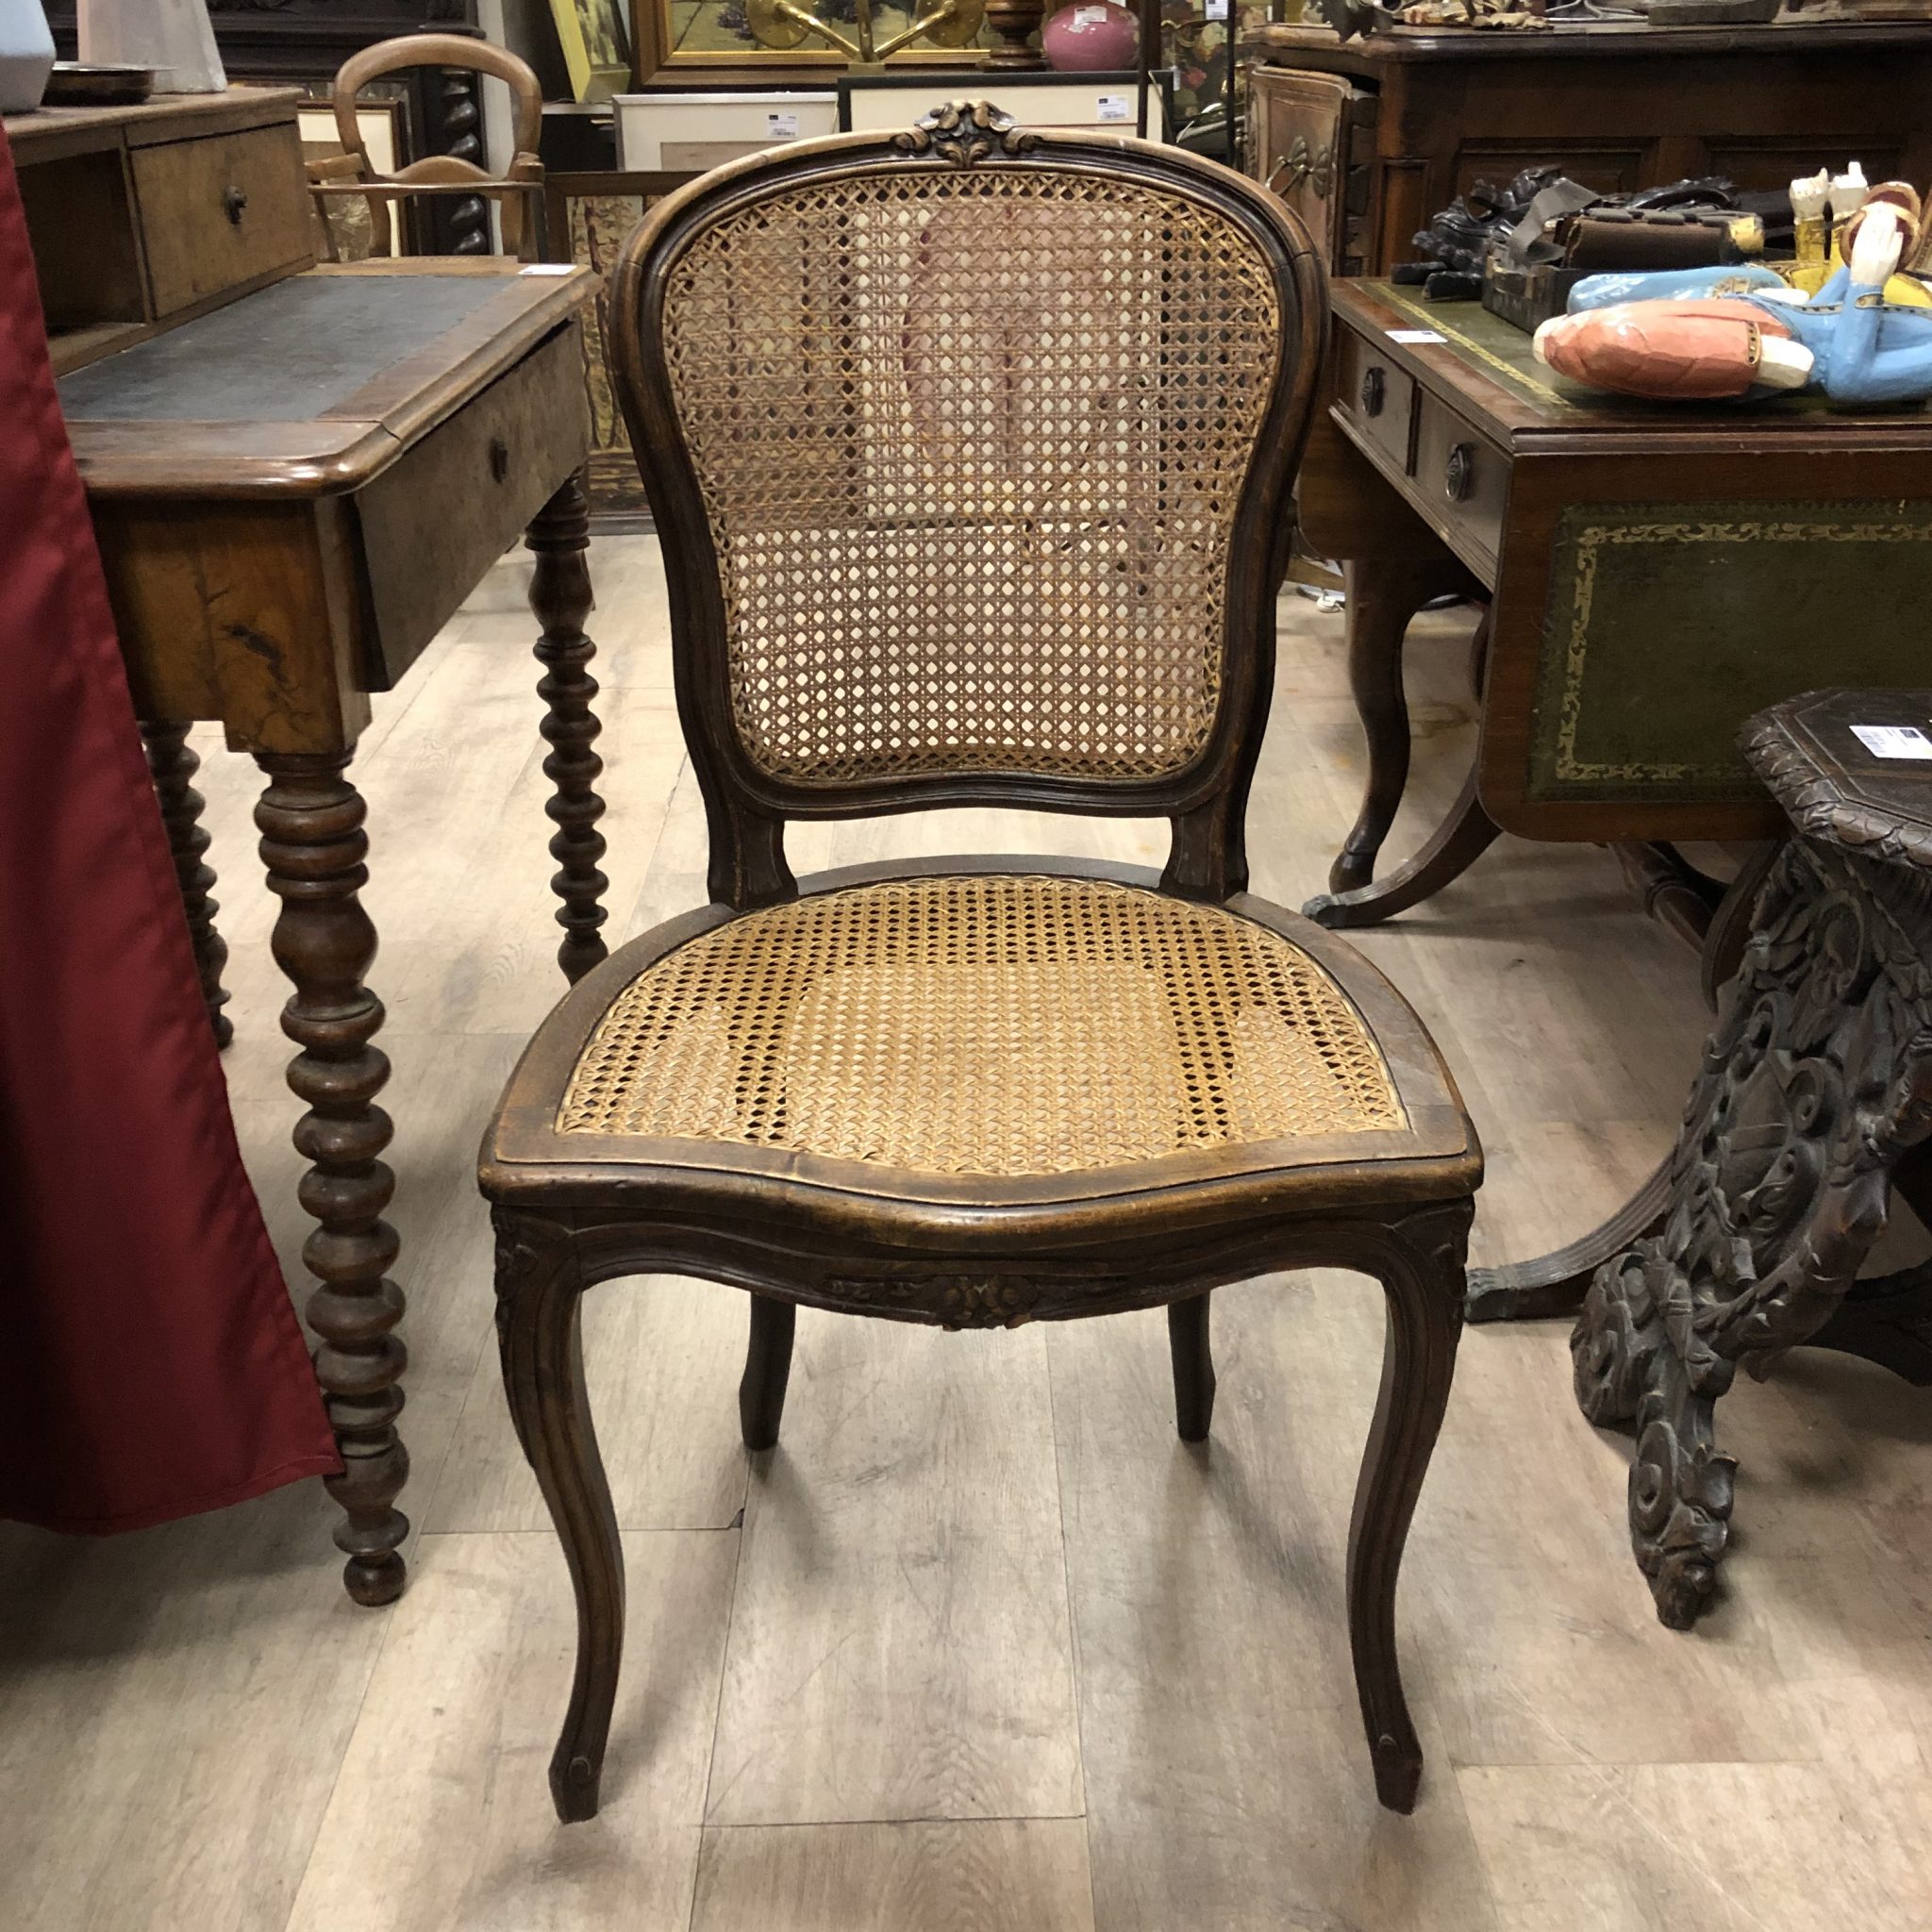 6 chaises cannées style Louis XV